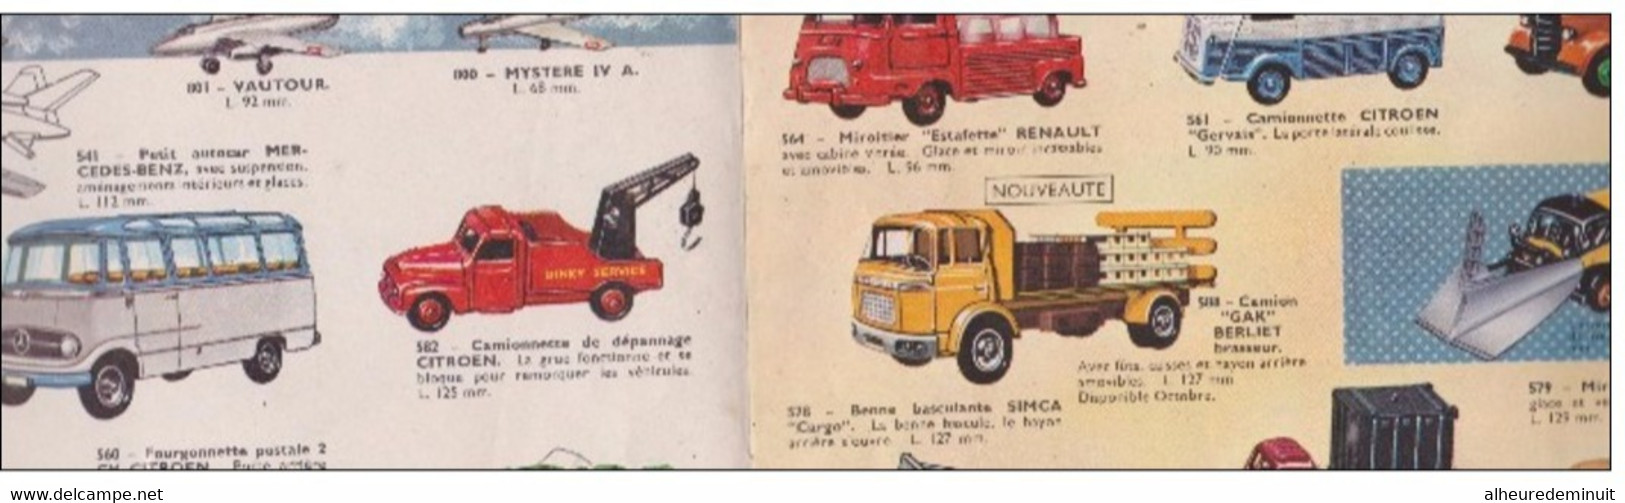 Catalogue DINKY TOYS"SUPERTOYS"1964"voiture Miniature"camions"militaire"DS"Peugeot"Renault"Citroën"2cv"simca"opel - Zeitschriften